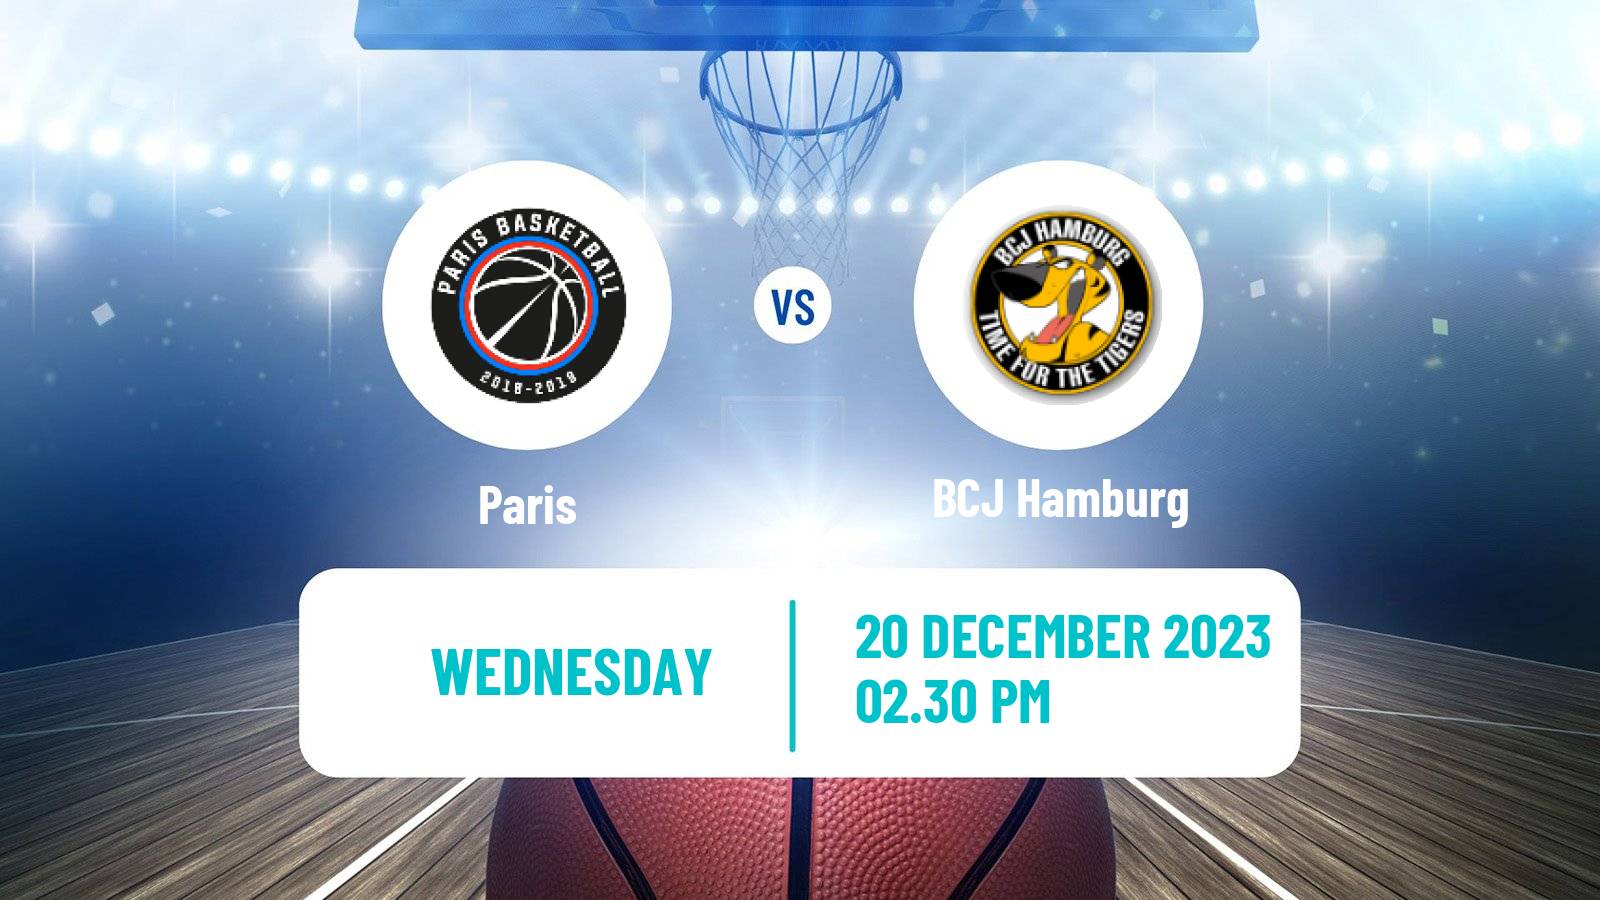 Basketball Eurocup Paris - BCJ Hamburg